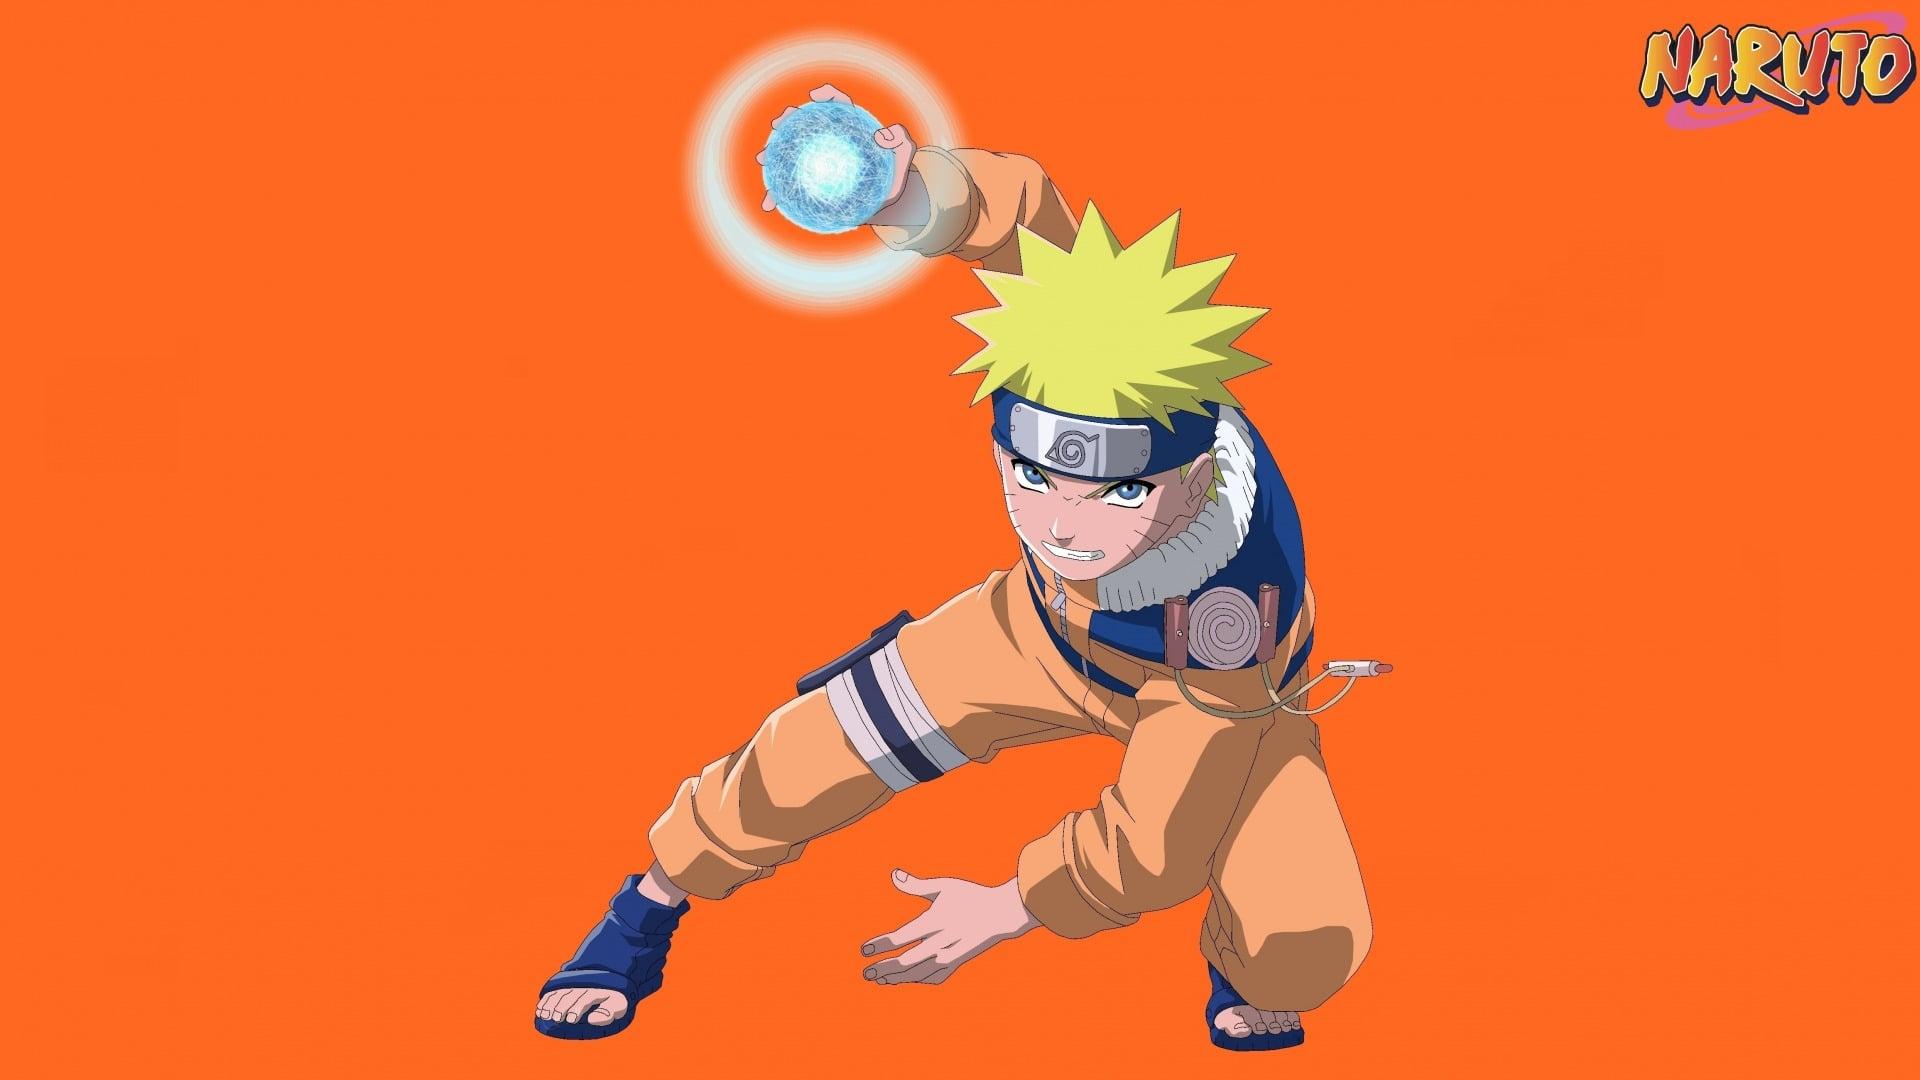 Naruto backdrop